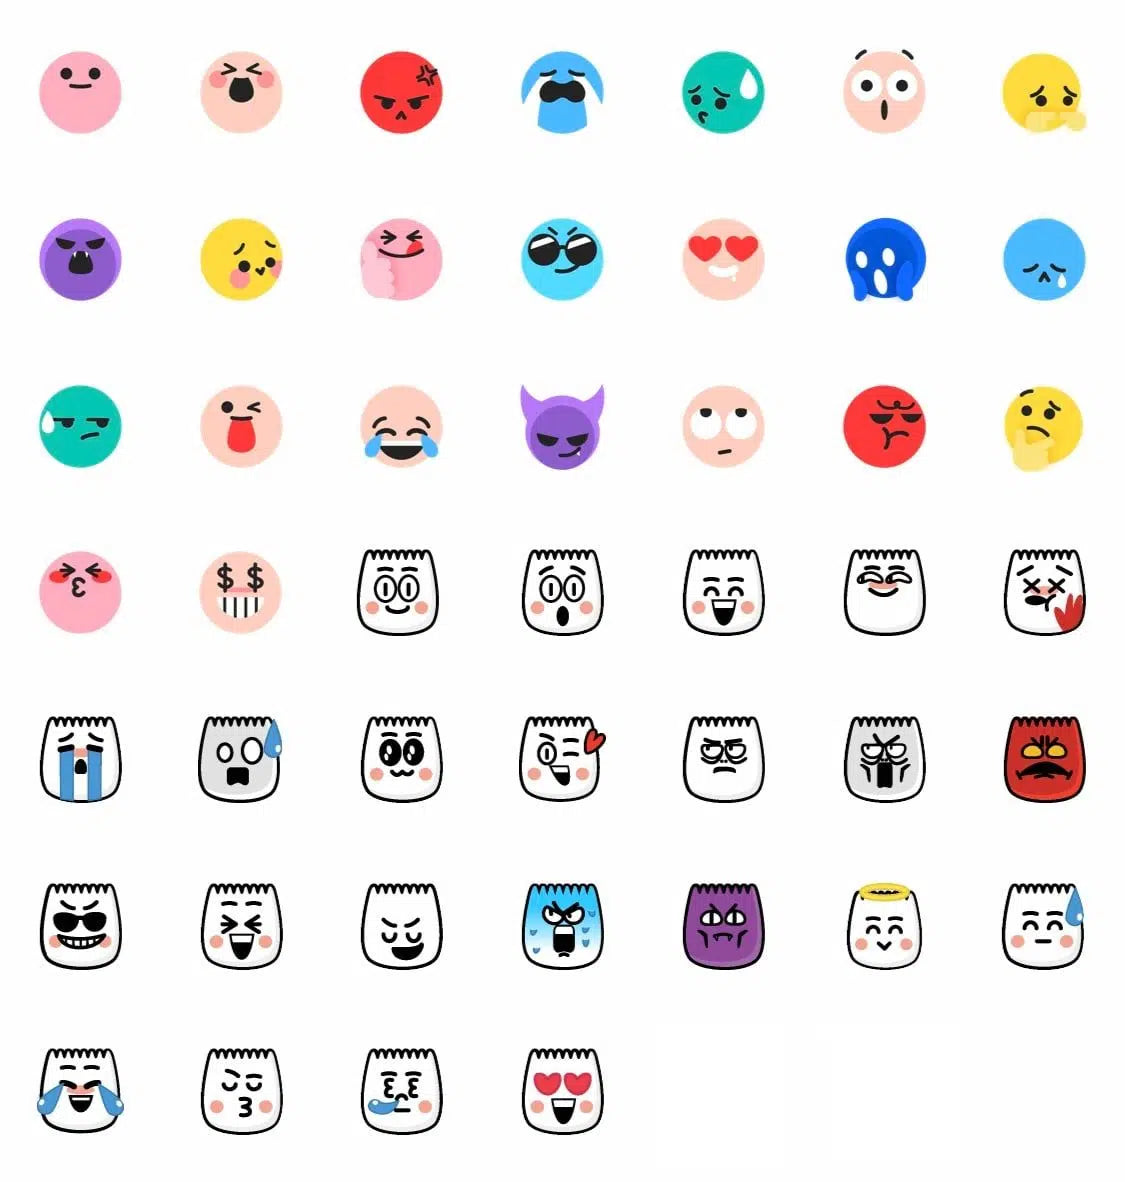 Tik tok : how to use secret emojis ?